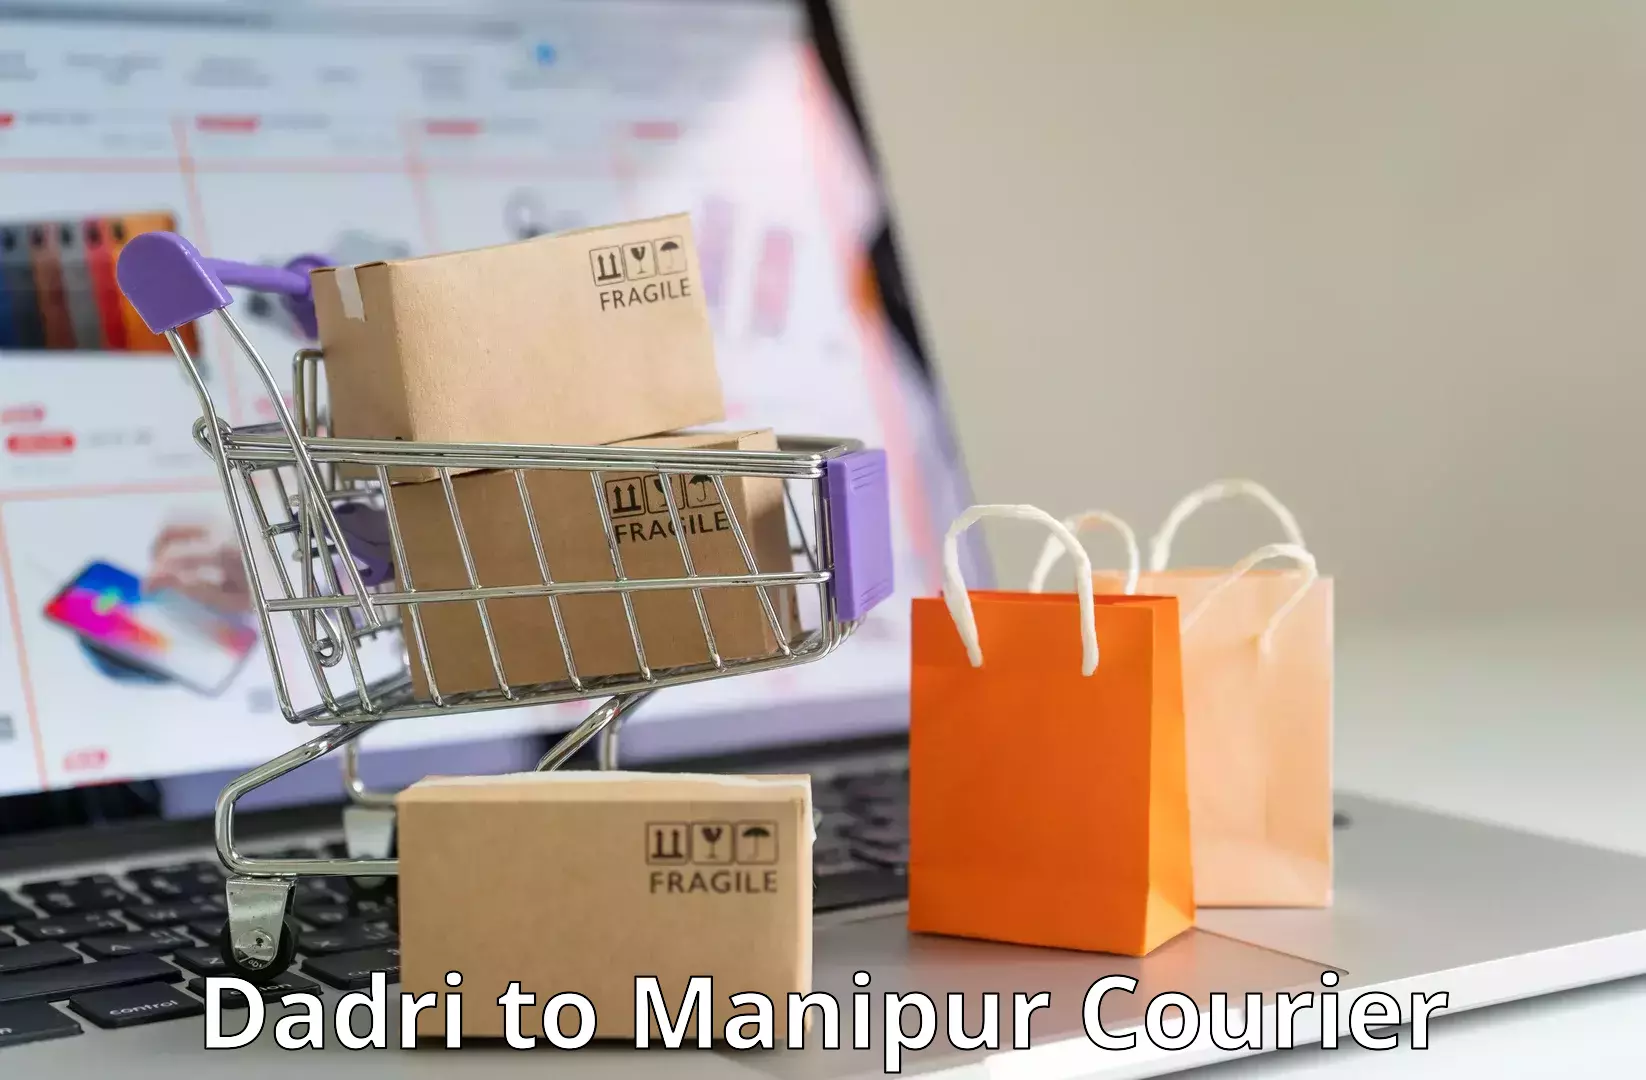 User-friendly courier app Dadri to Manipur